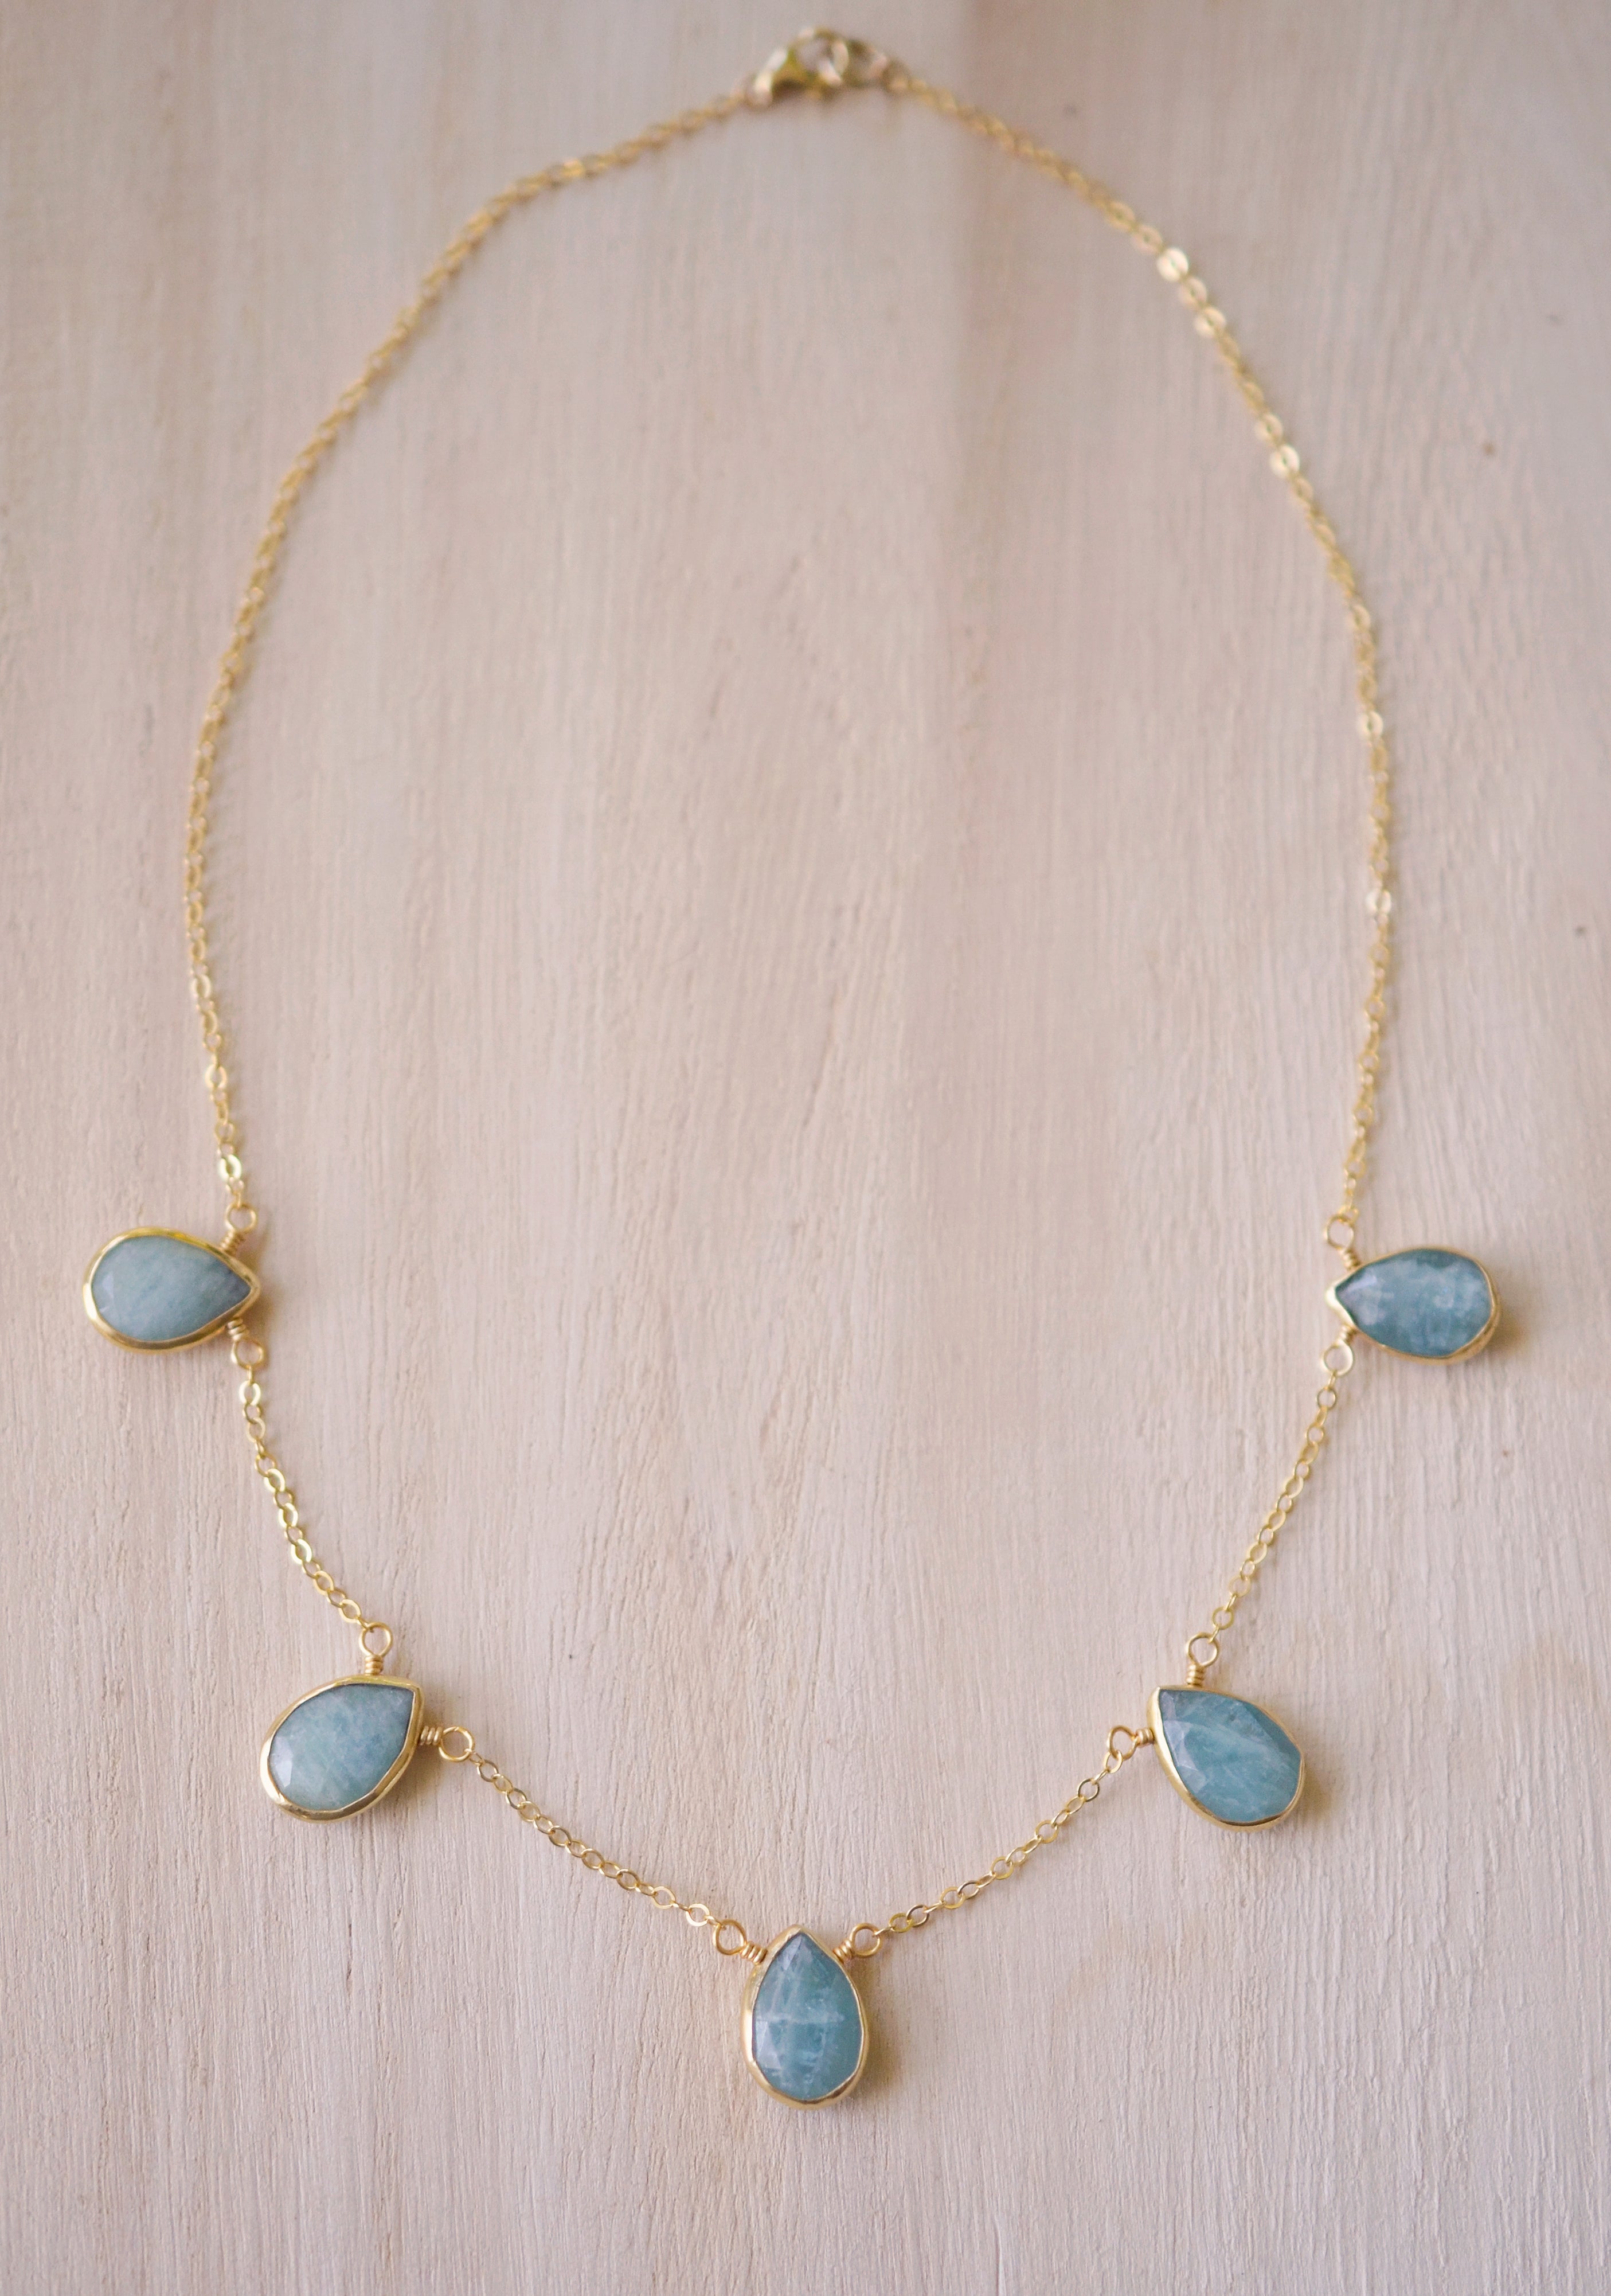 14Kt Gold Natural Aquamarine Teardrop Pendant Necklace | eBay